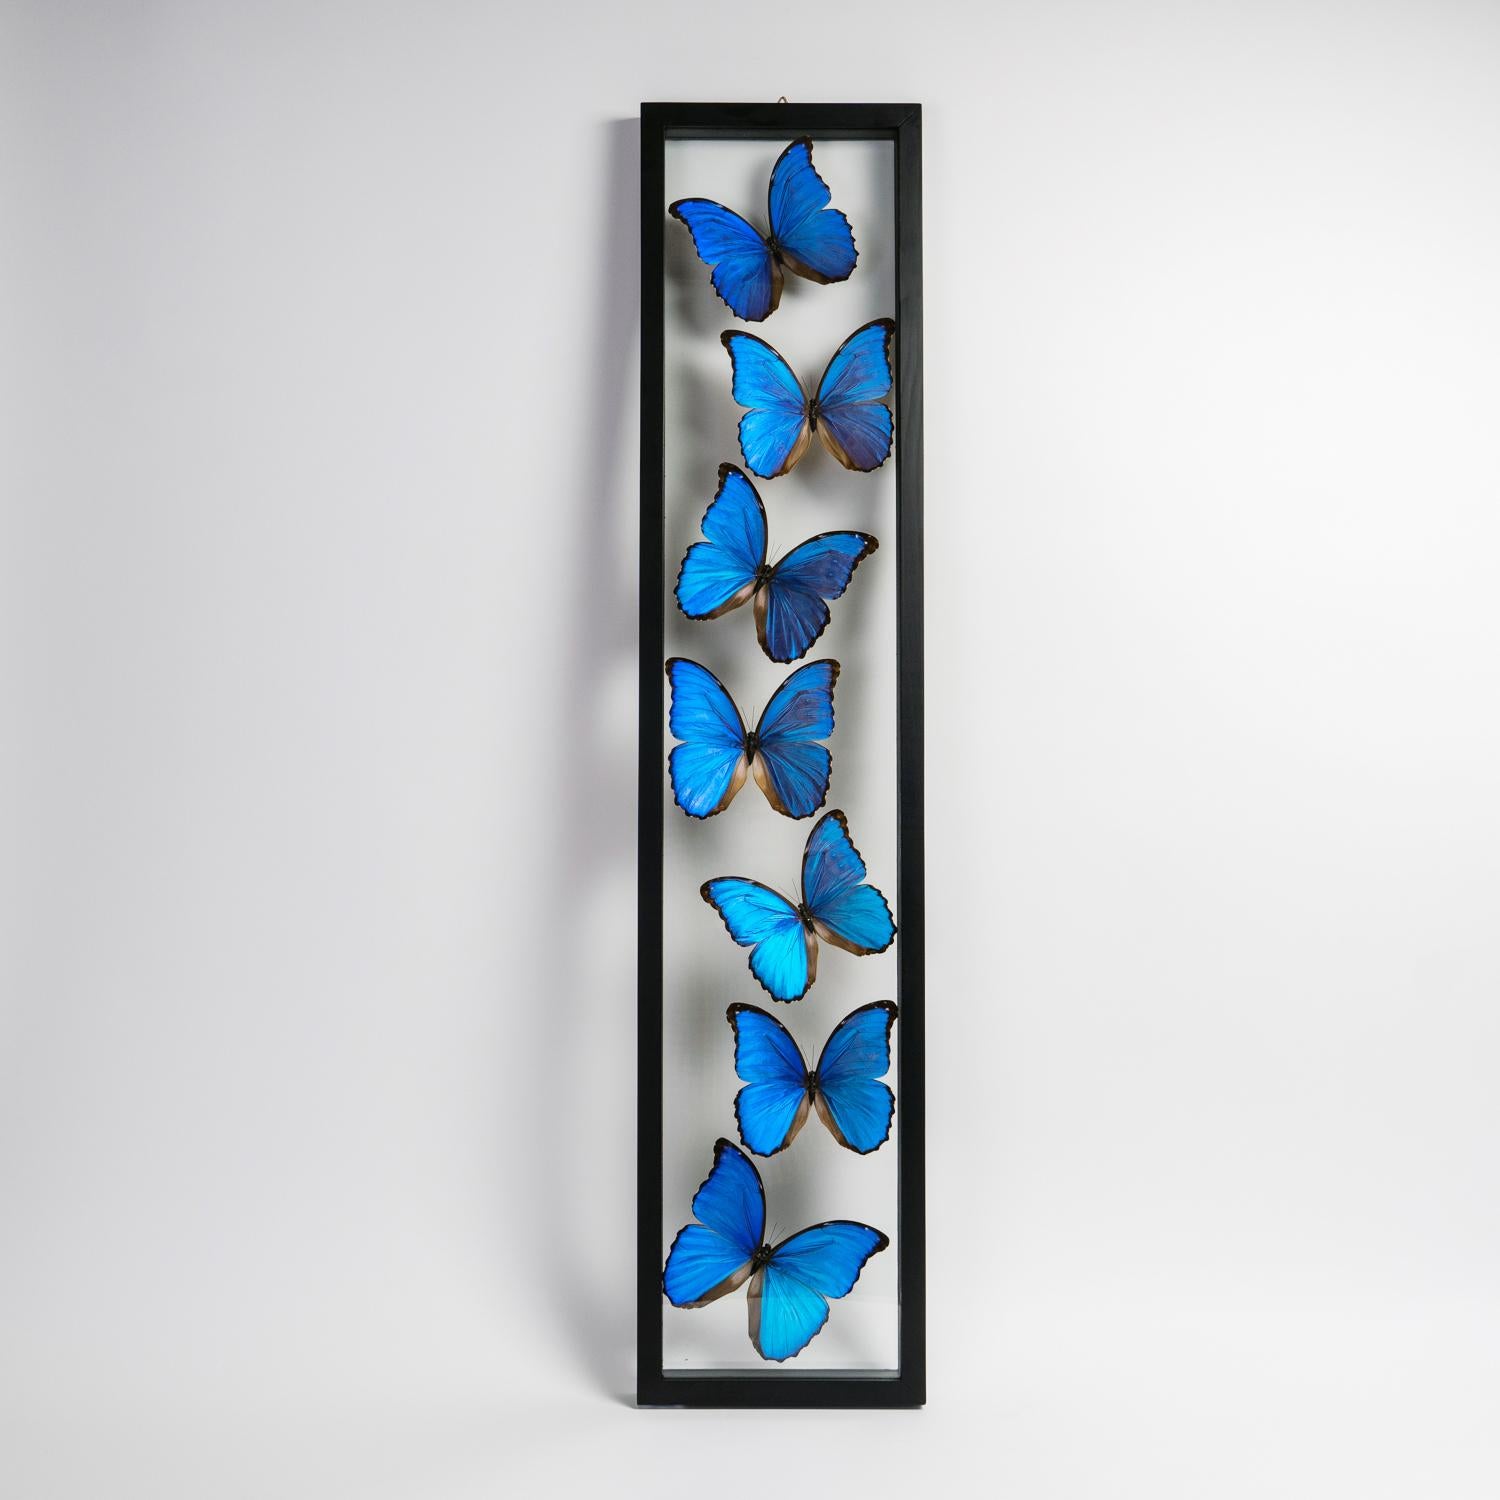 Acrylic 7 Real Morpho Butterflies Specimen in Display Frame